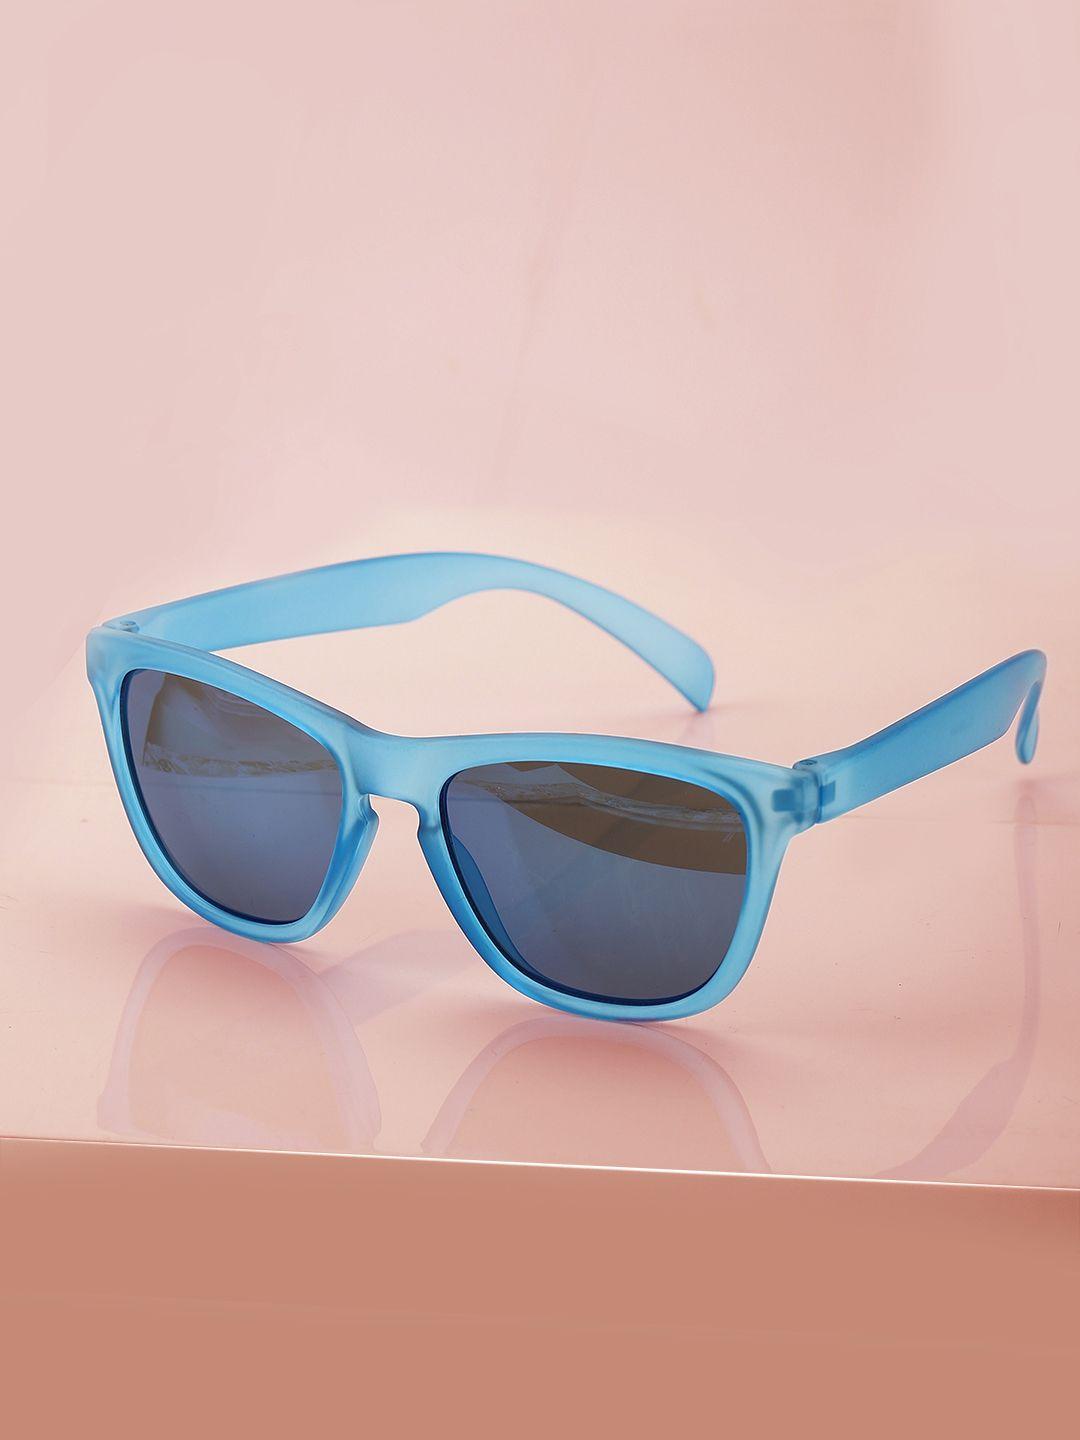 carlton london boys blue lens & blue wayfarer sunglasses